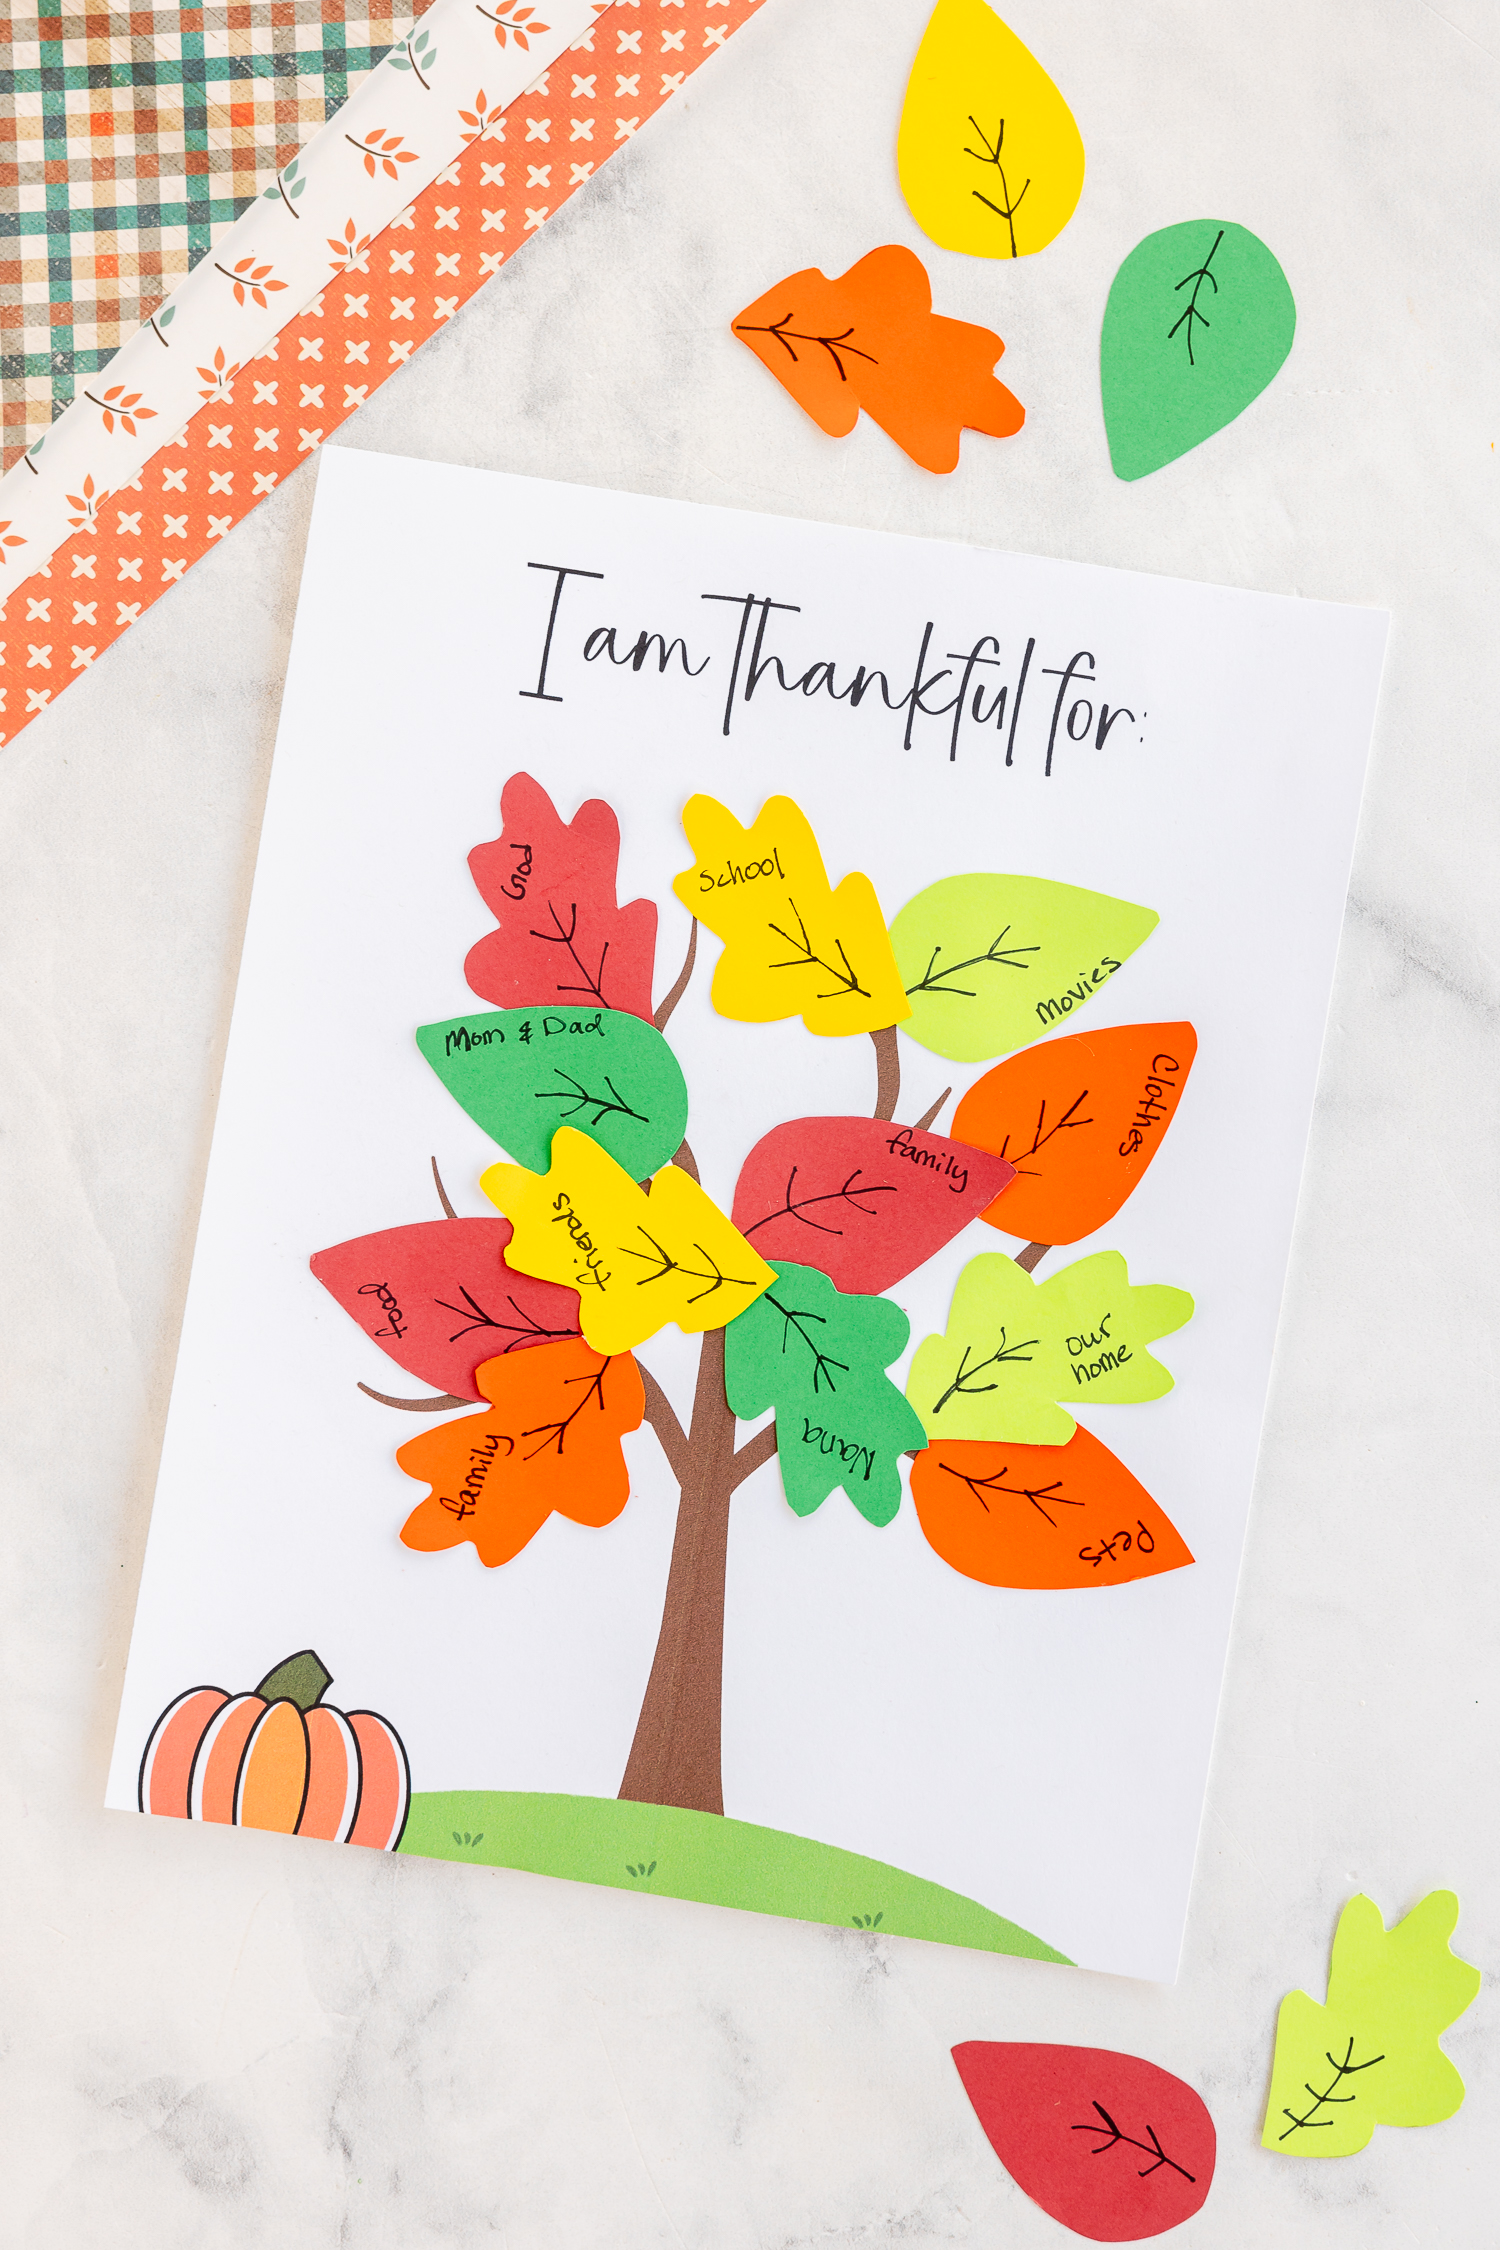 Thankful Tree Free Printable Craft for Kids